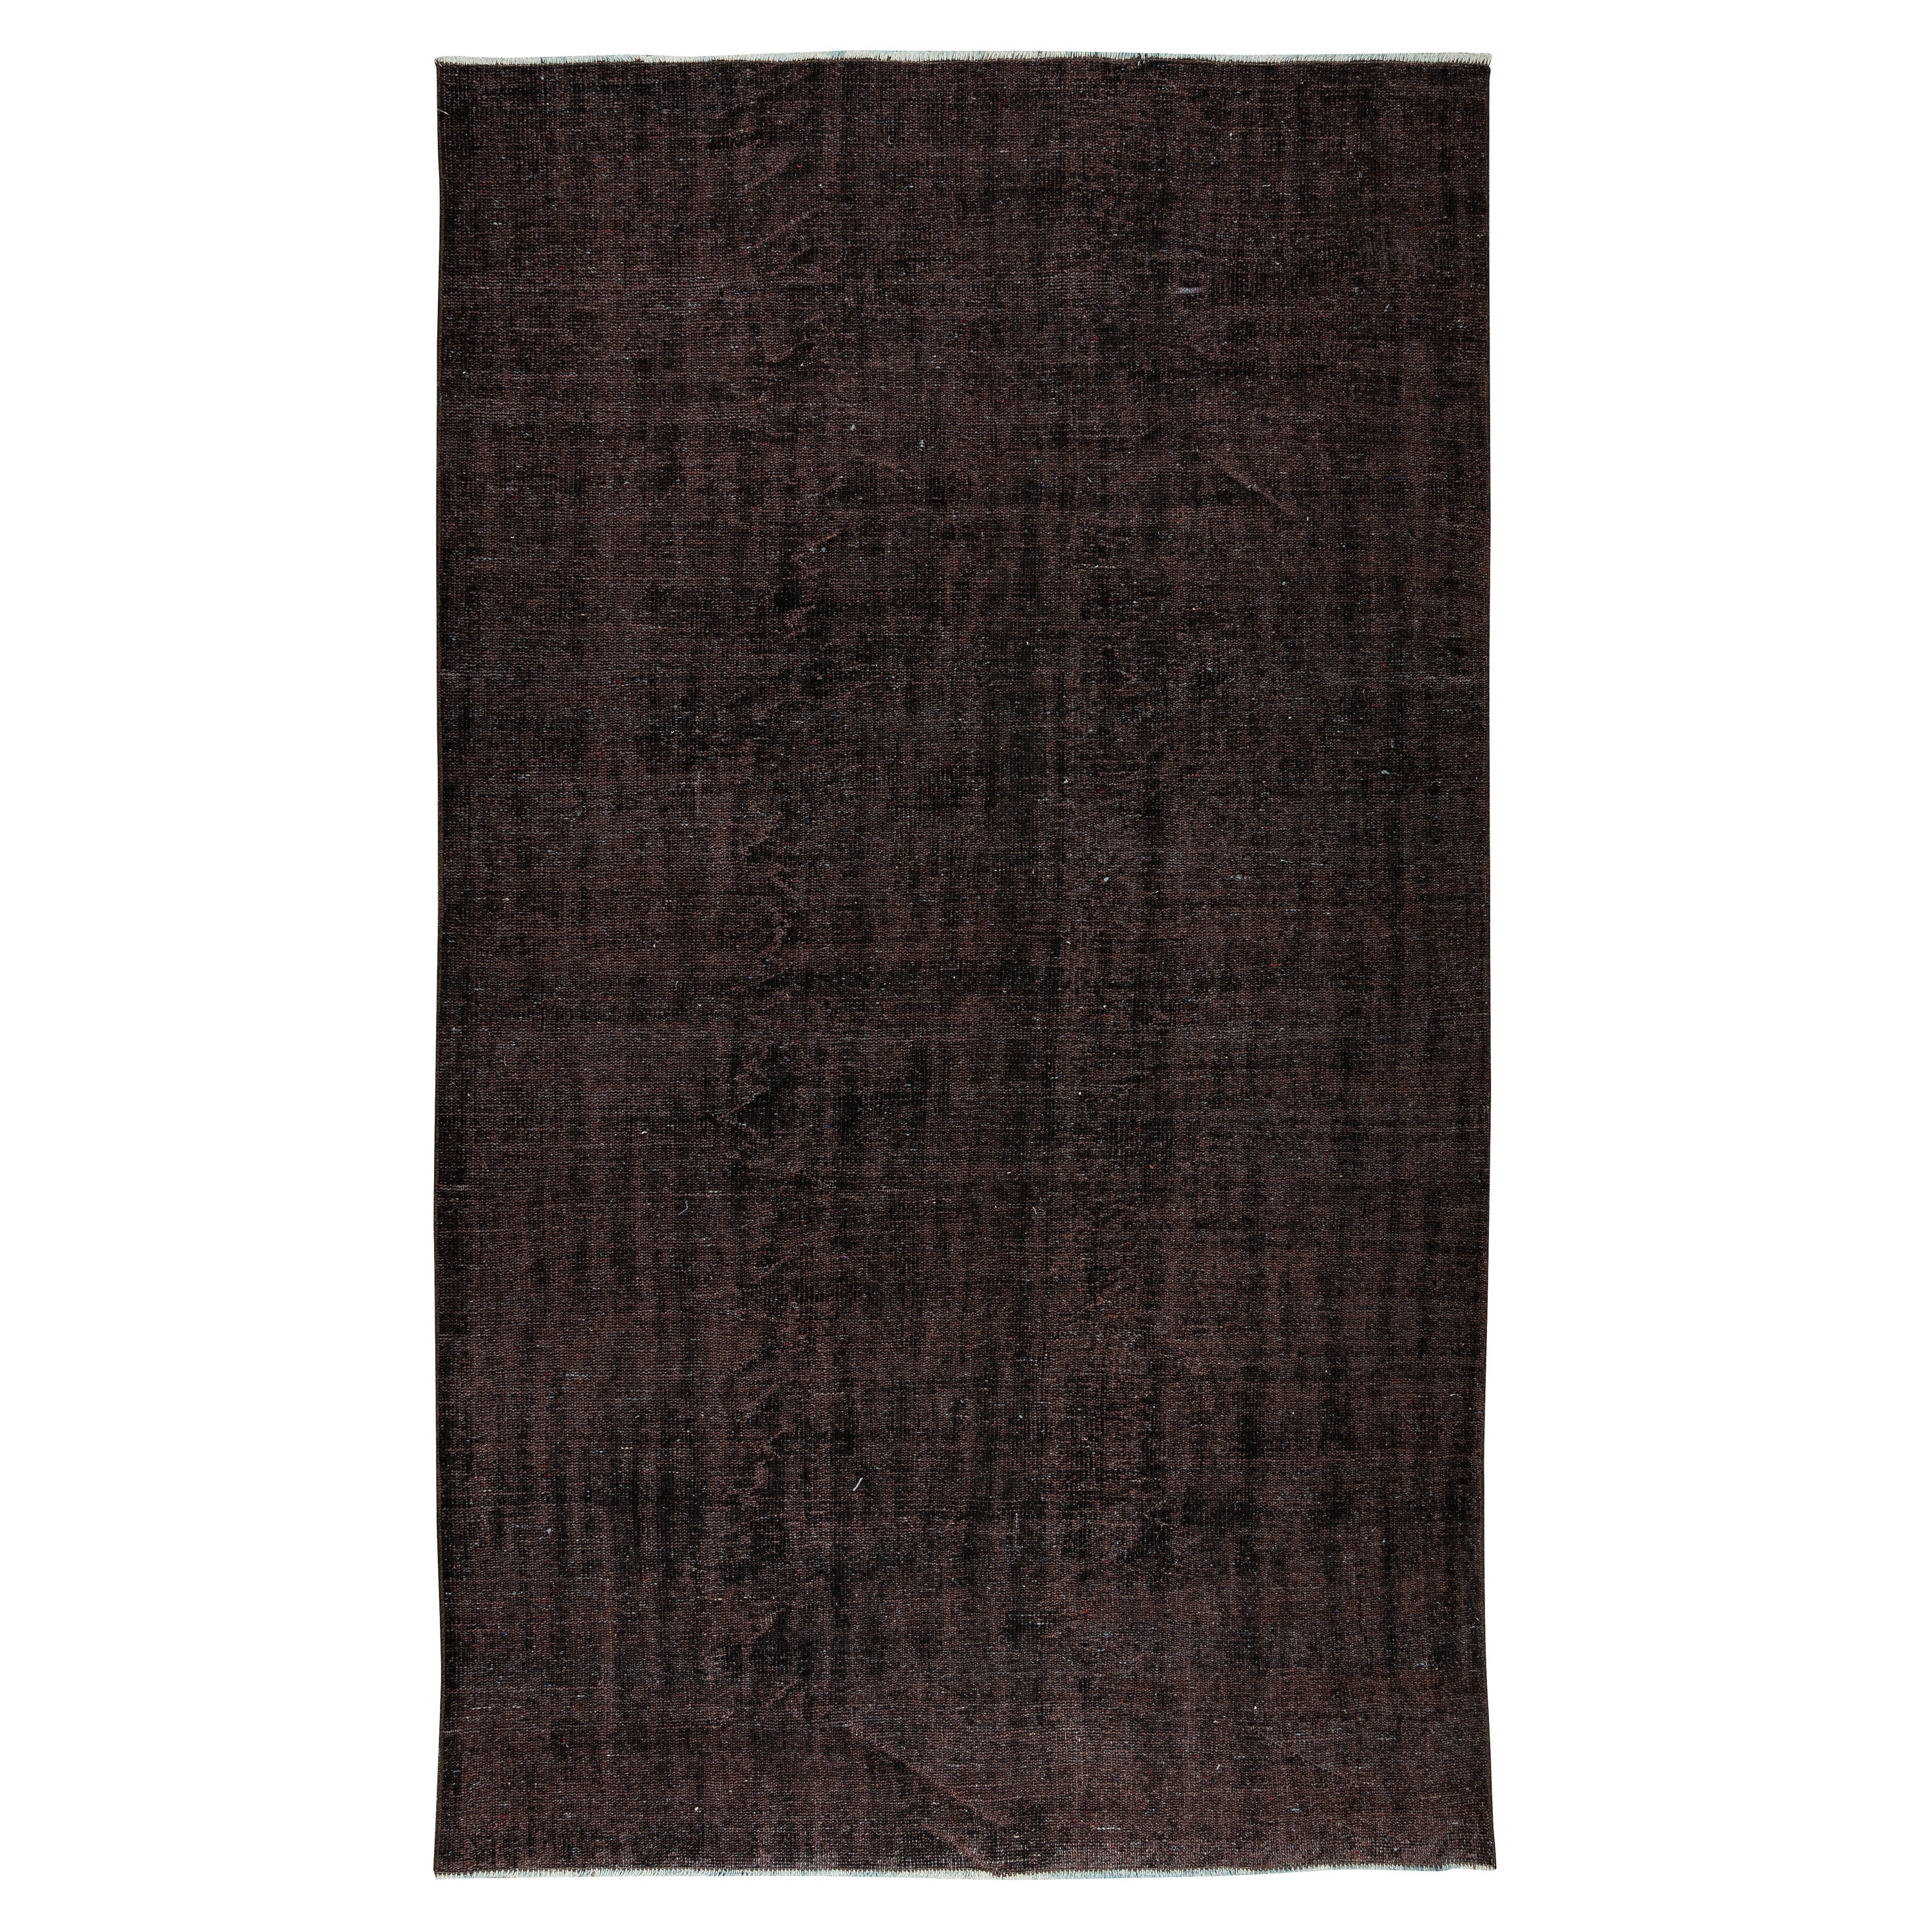 5.8x10 Ft Handmade Vintage Turkish Wool Rug in Solid Brown 4 Modern Interiors For Sale